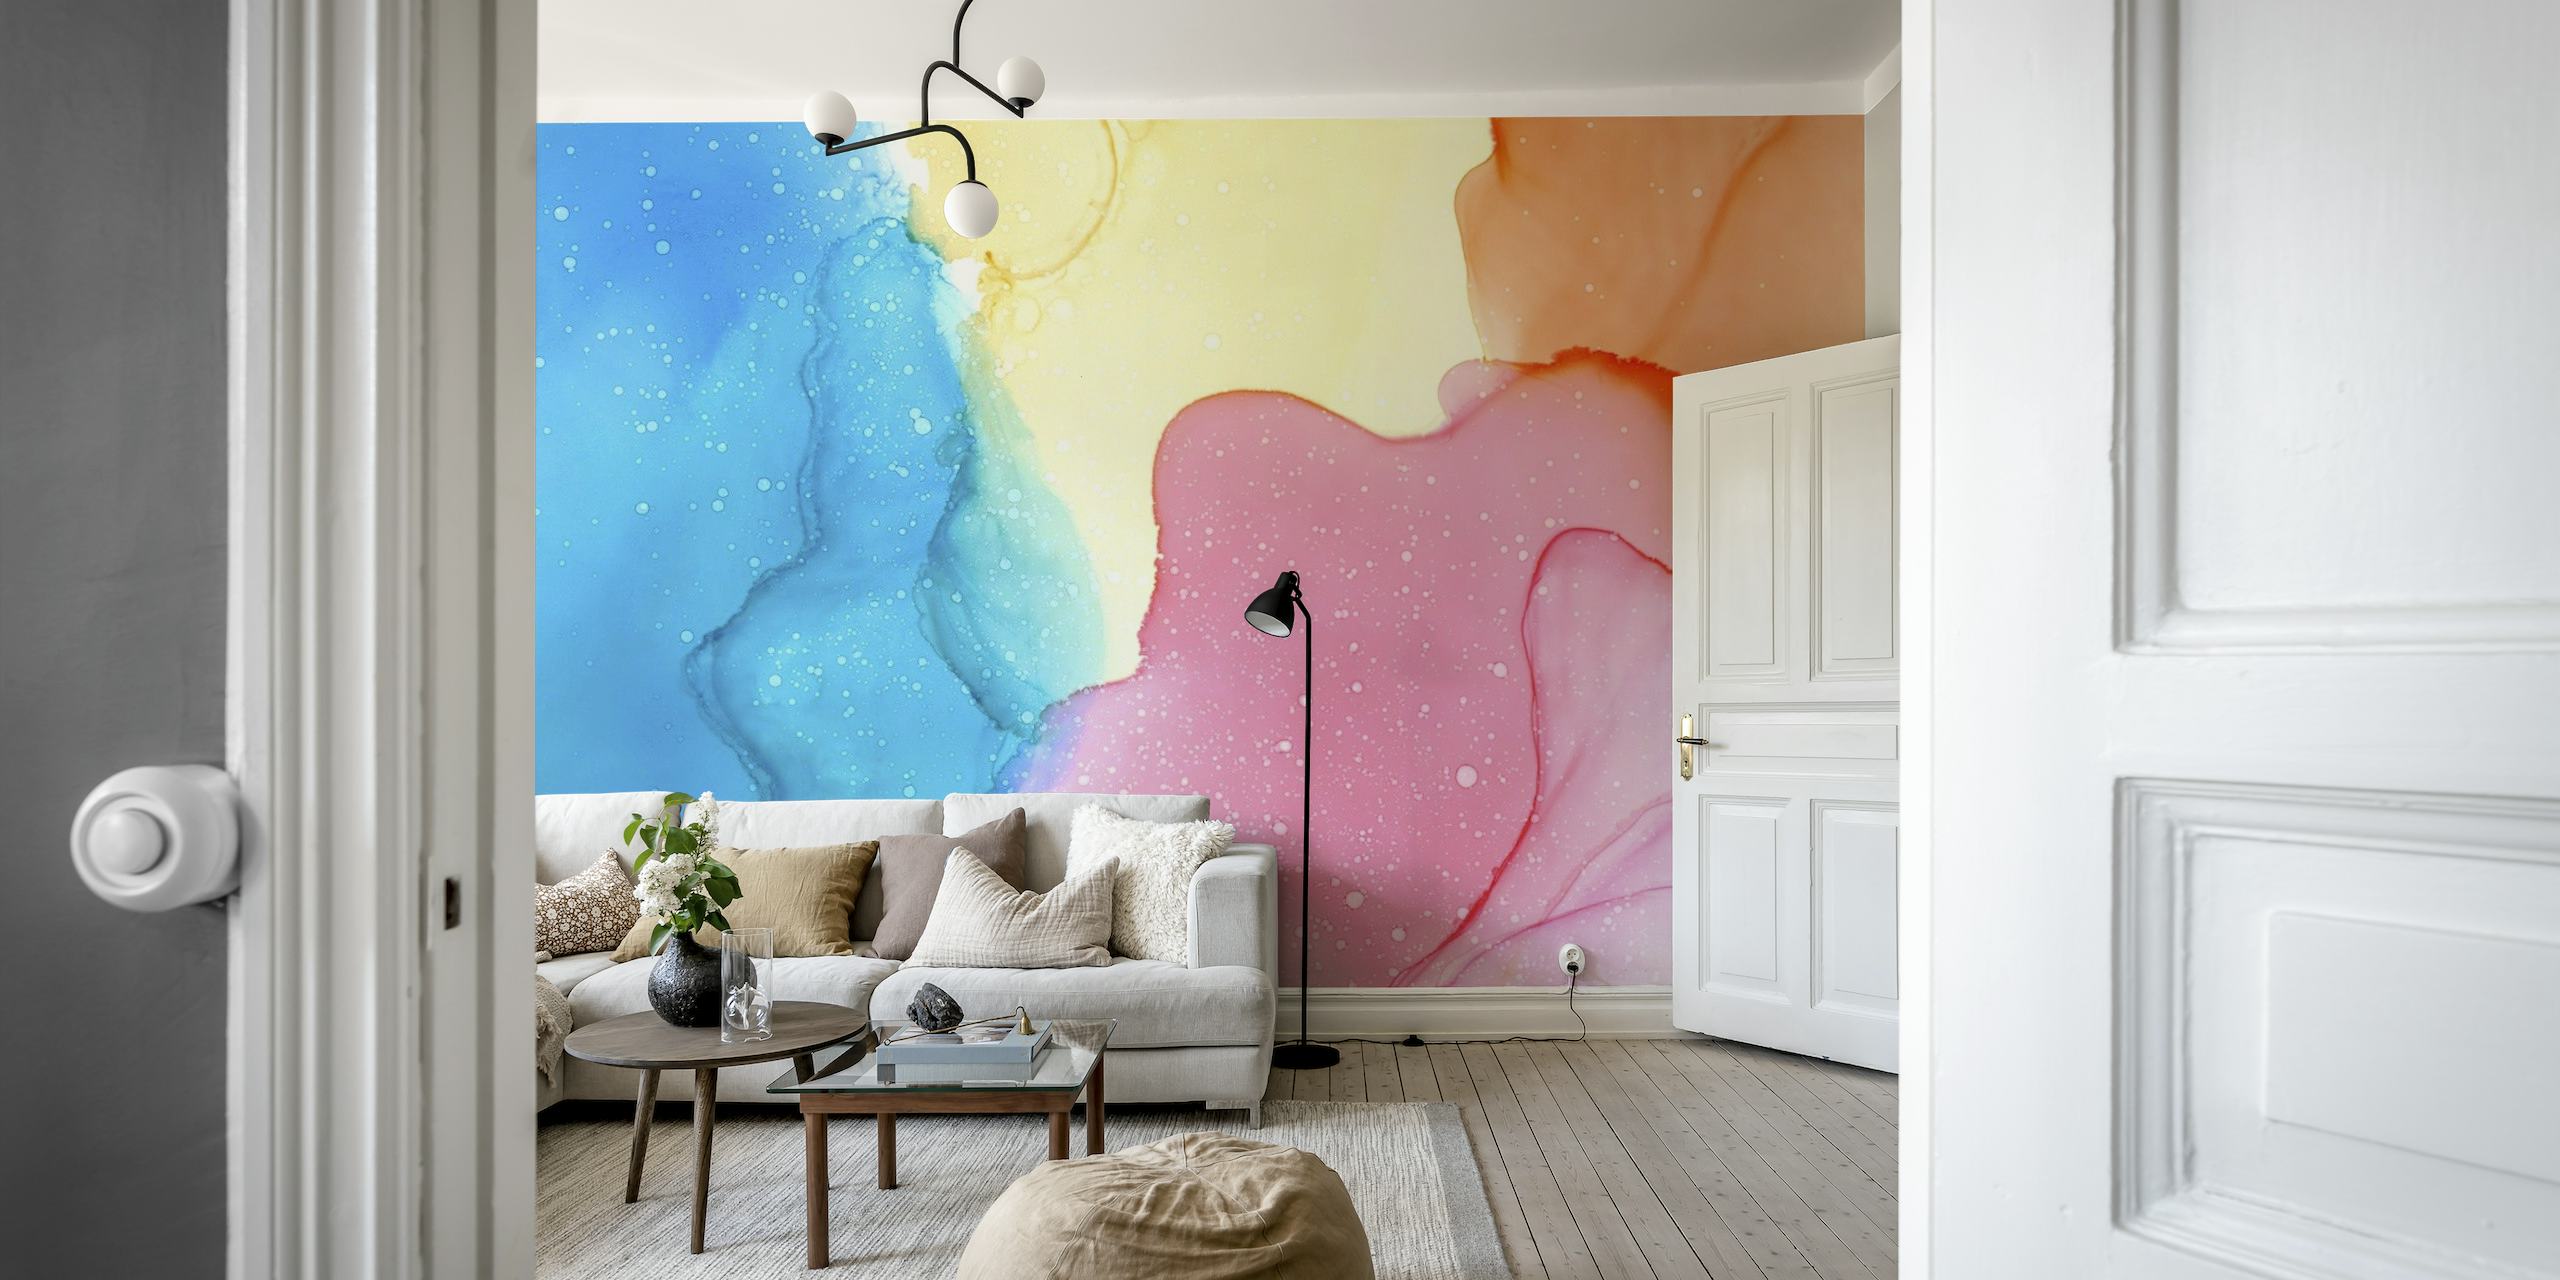 Apstraktni pastelni akvarel zidni mural s nježnim mješavinama plave, ružičaste, narančaste i žute tinte